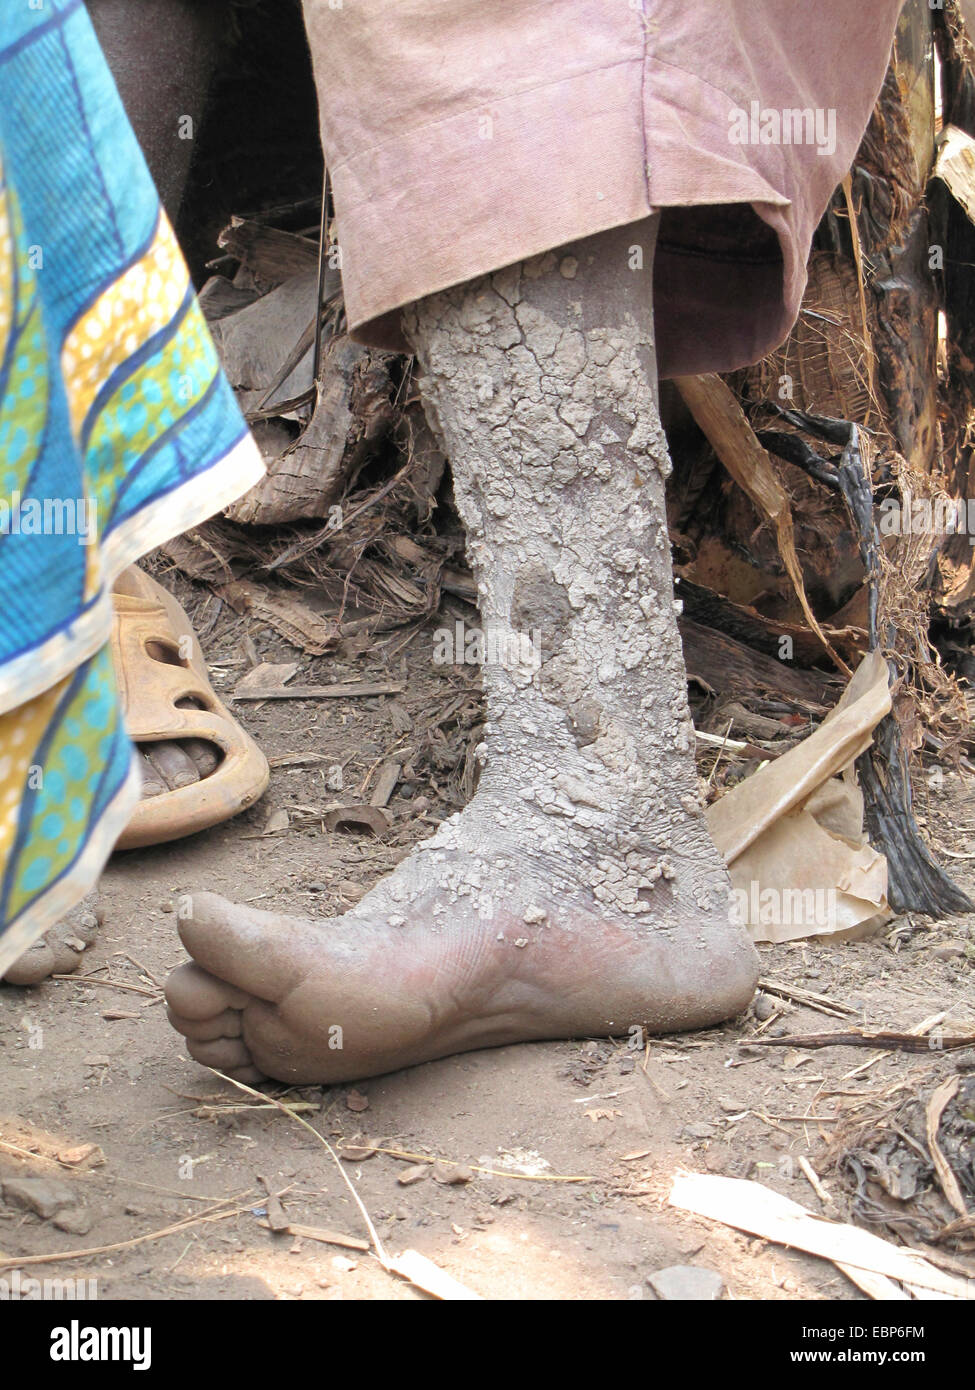 Fango-coperto gamba di un elemento maschio della minoranza di Batwa che vive in una zona rurale, Burundi Bujumbura rurale, Mutimbuzi Foto Stock